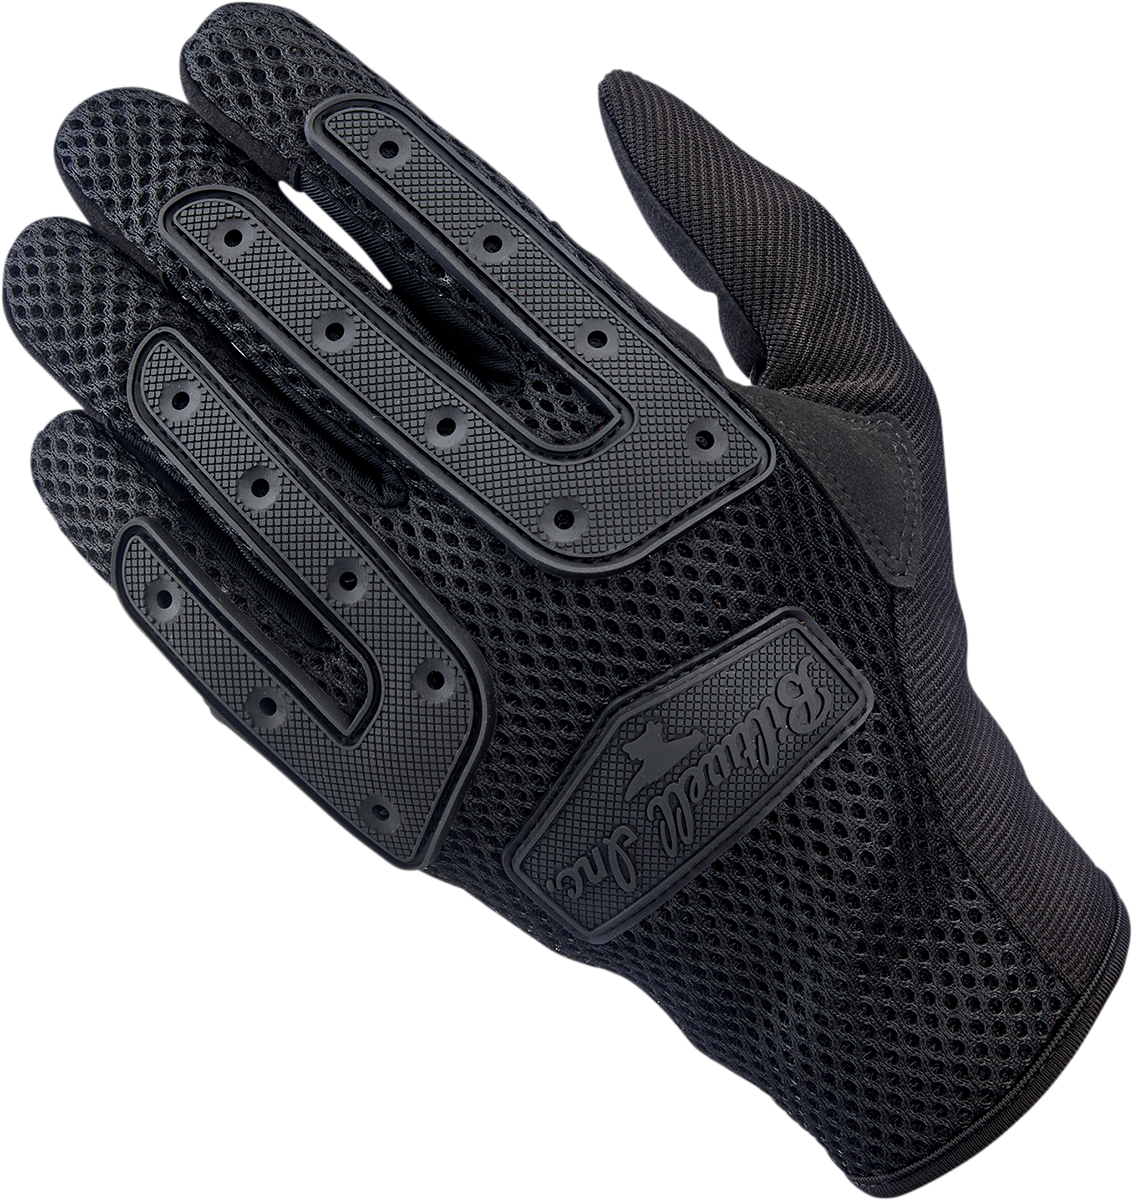 BILTWELL Anza Gloves - Black Out - XL 1507-0101-005